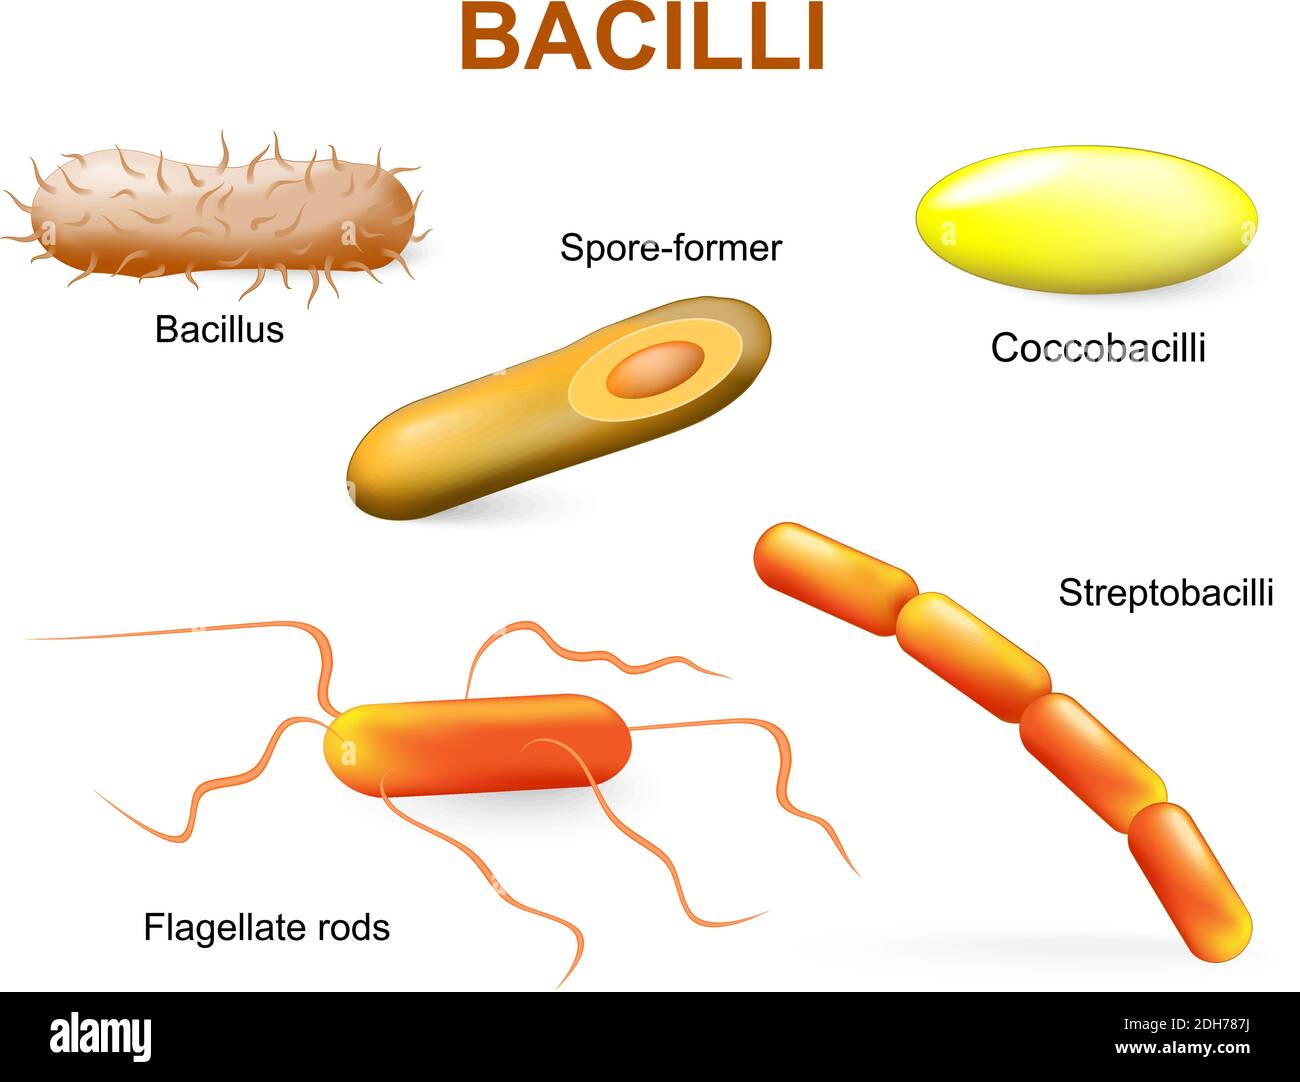 Bacillii. Common bacteria infecting human. Stock Vector